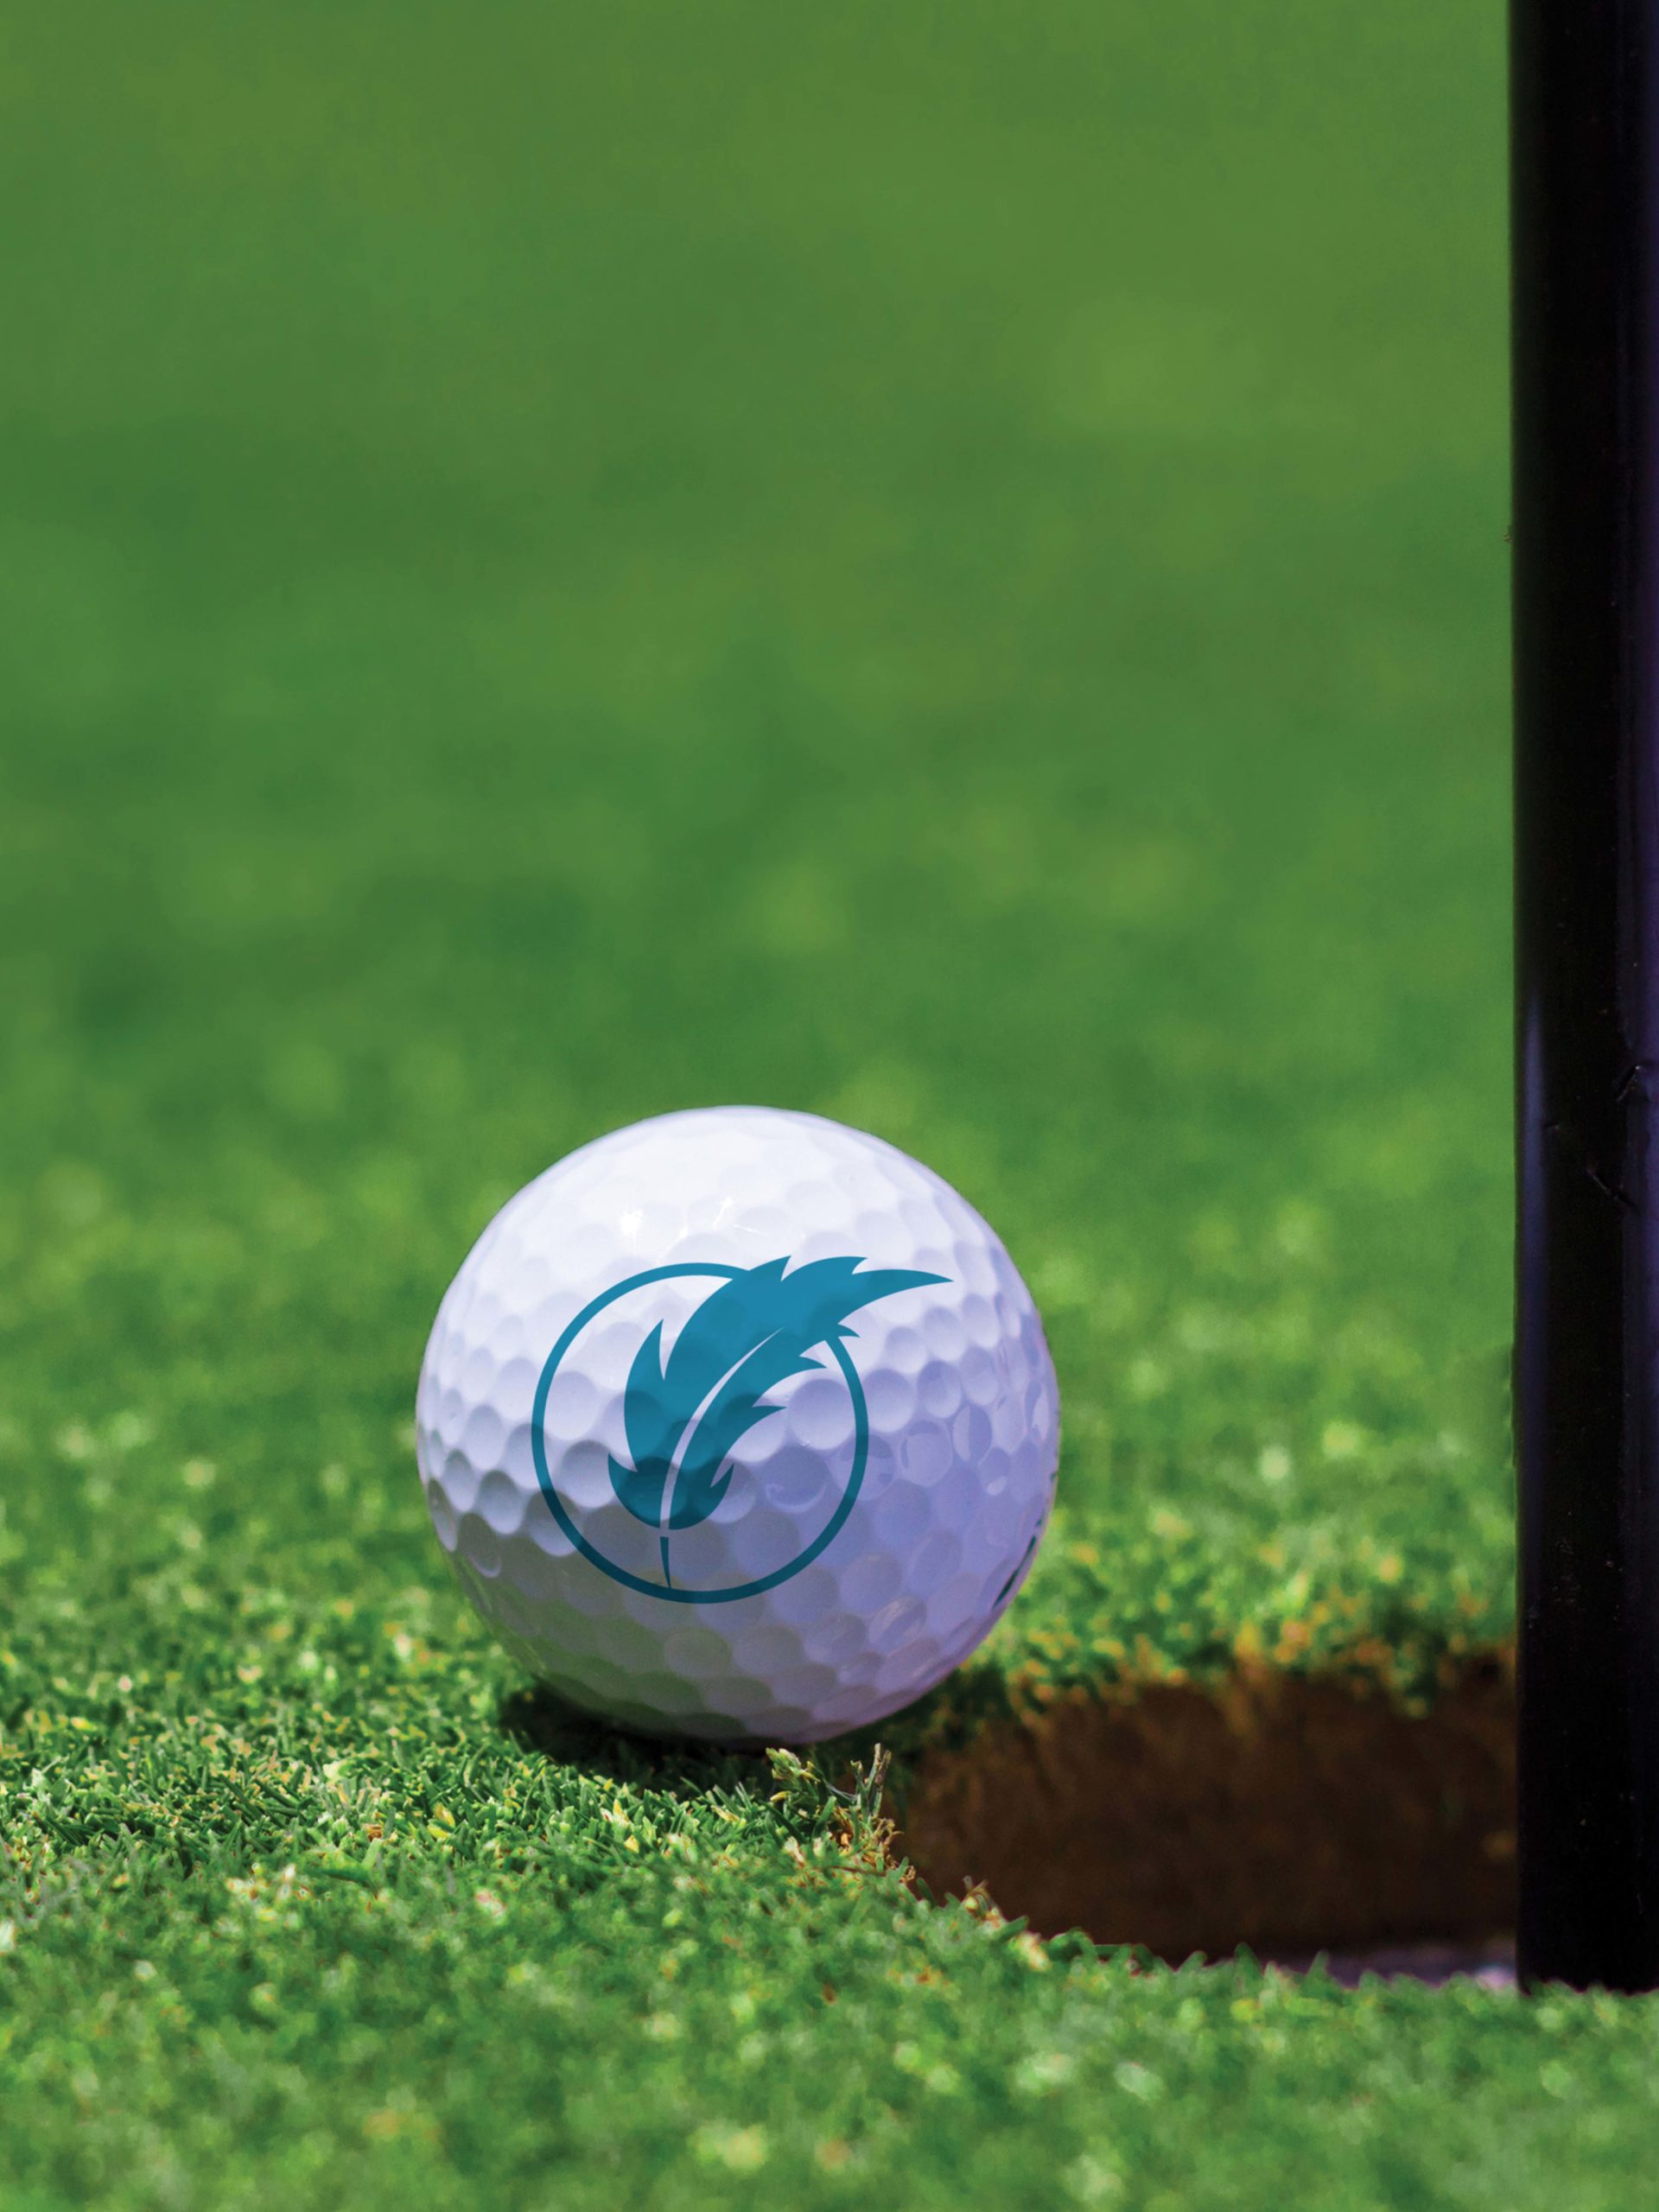 QDP Rebrand Icon Logo On Golf Ball